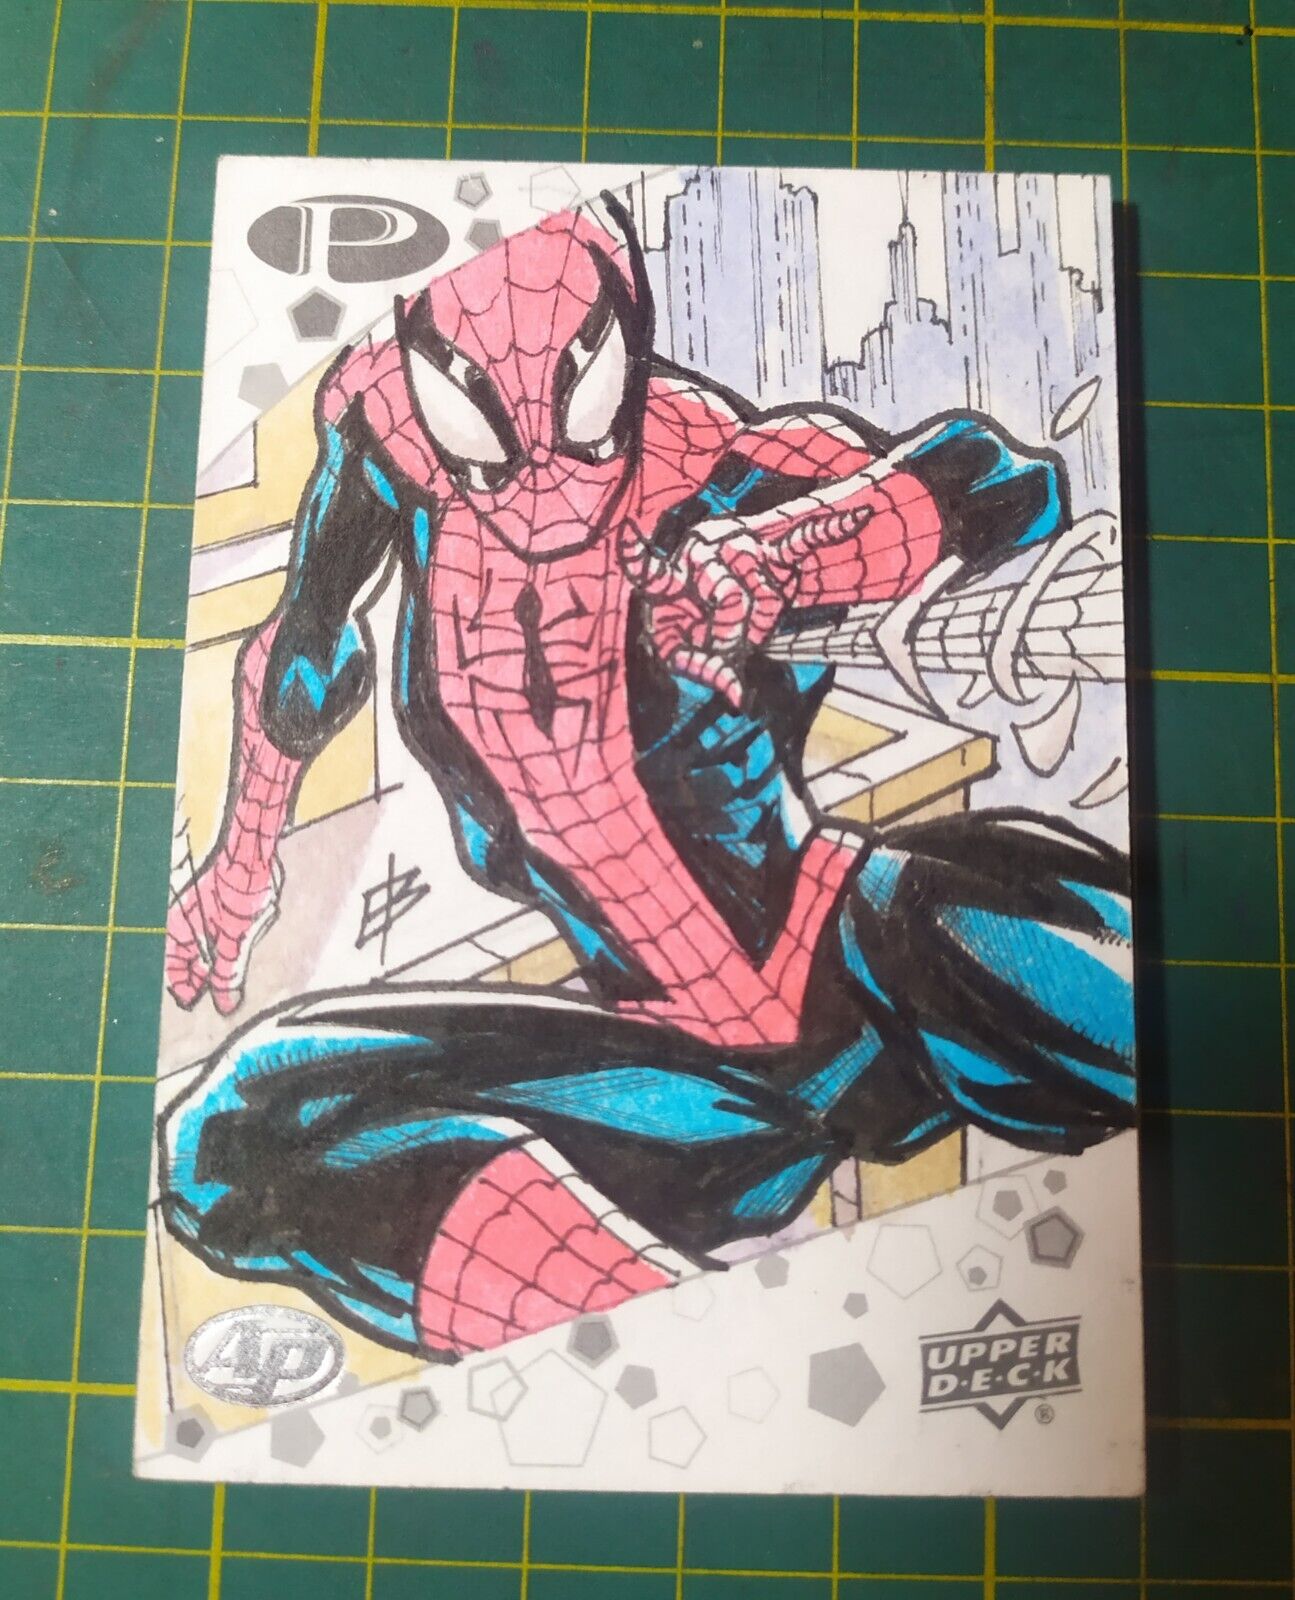 2021 Upper Deck Marvel Premier Sketch Card - Spider-Man  1/1 - by Ed Bilas